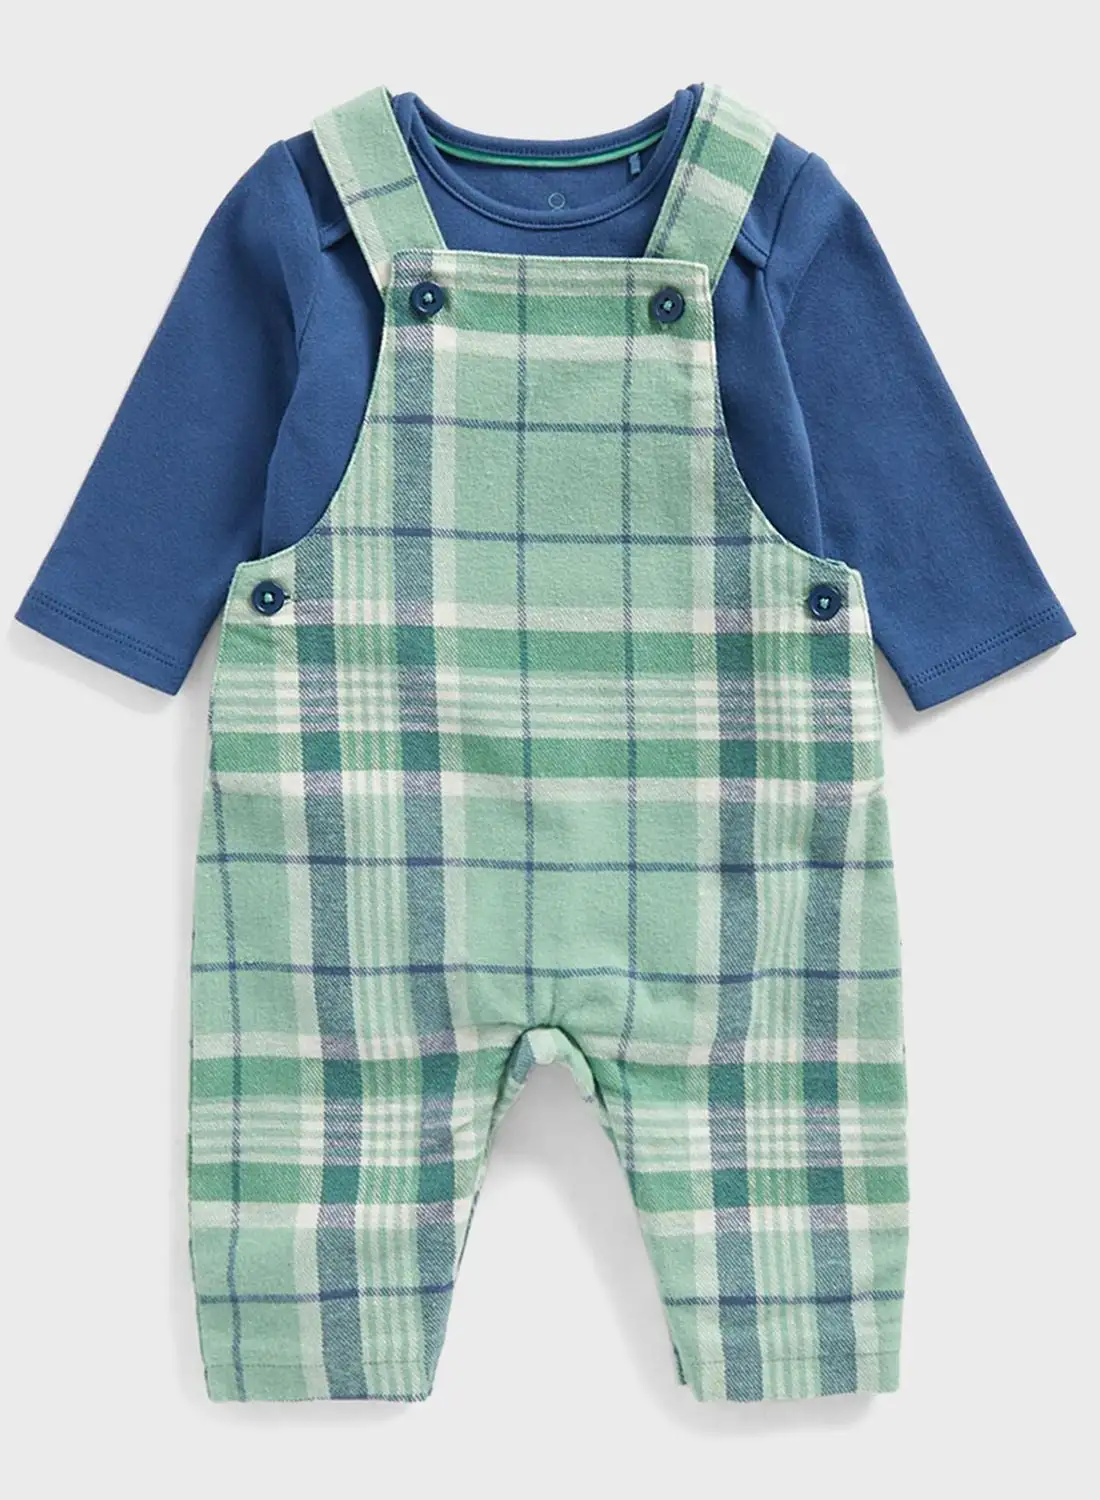 mothercare Infant Essential Bodysuit & Checks Dungaree Set